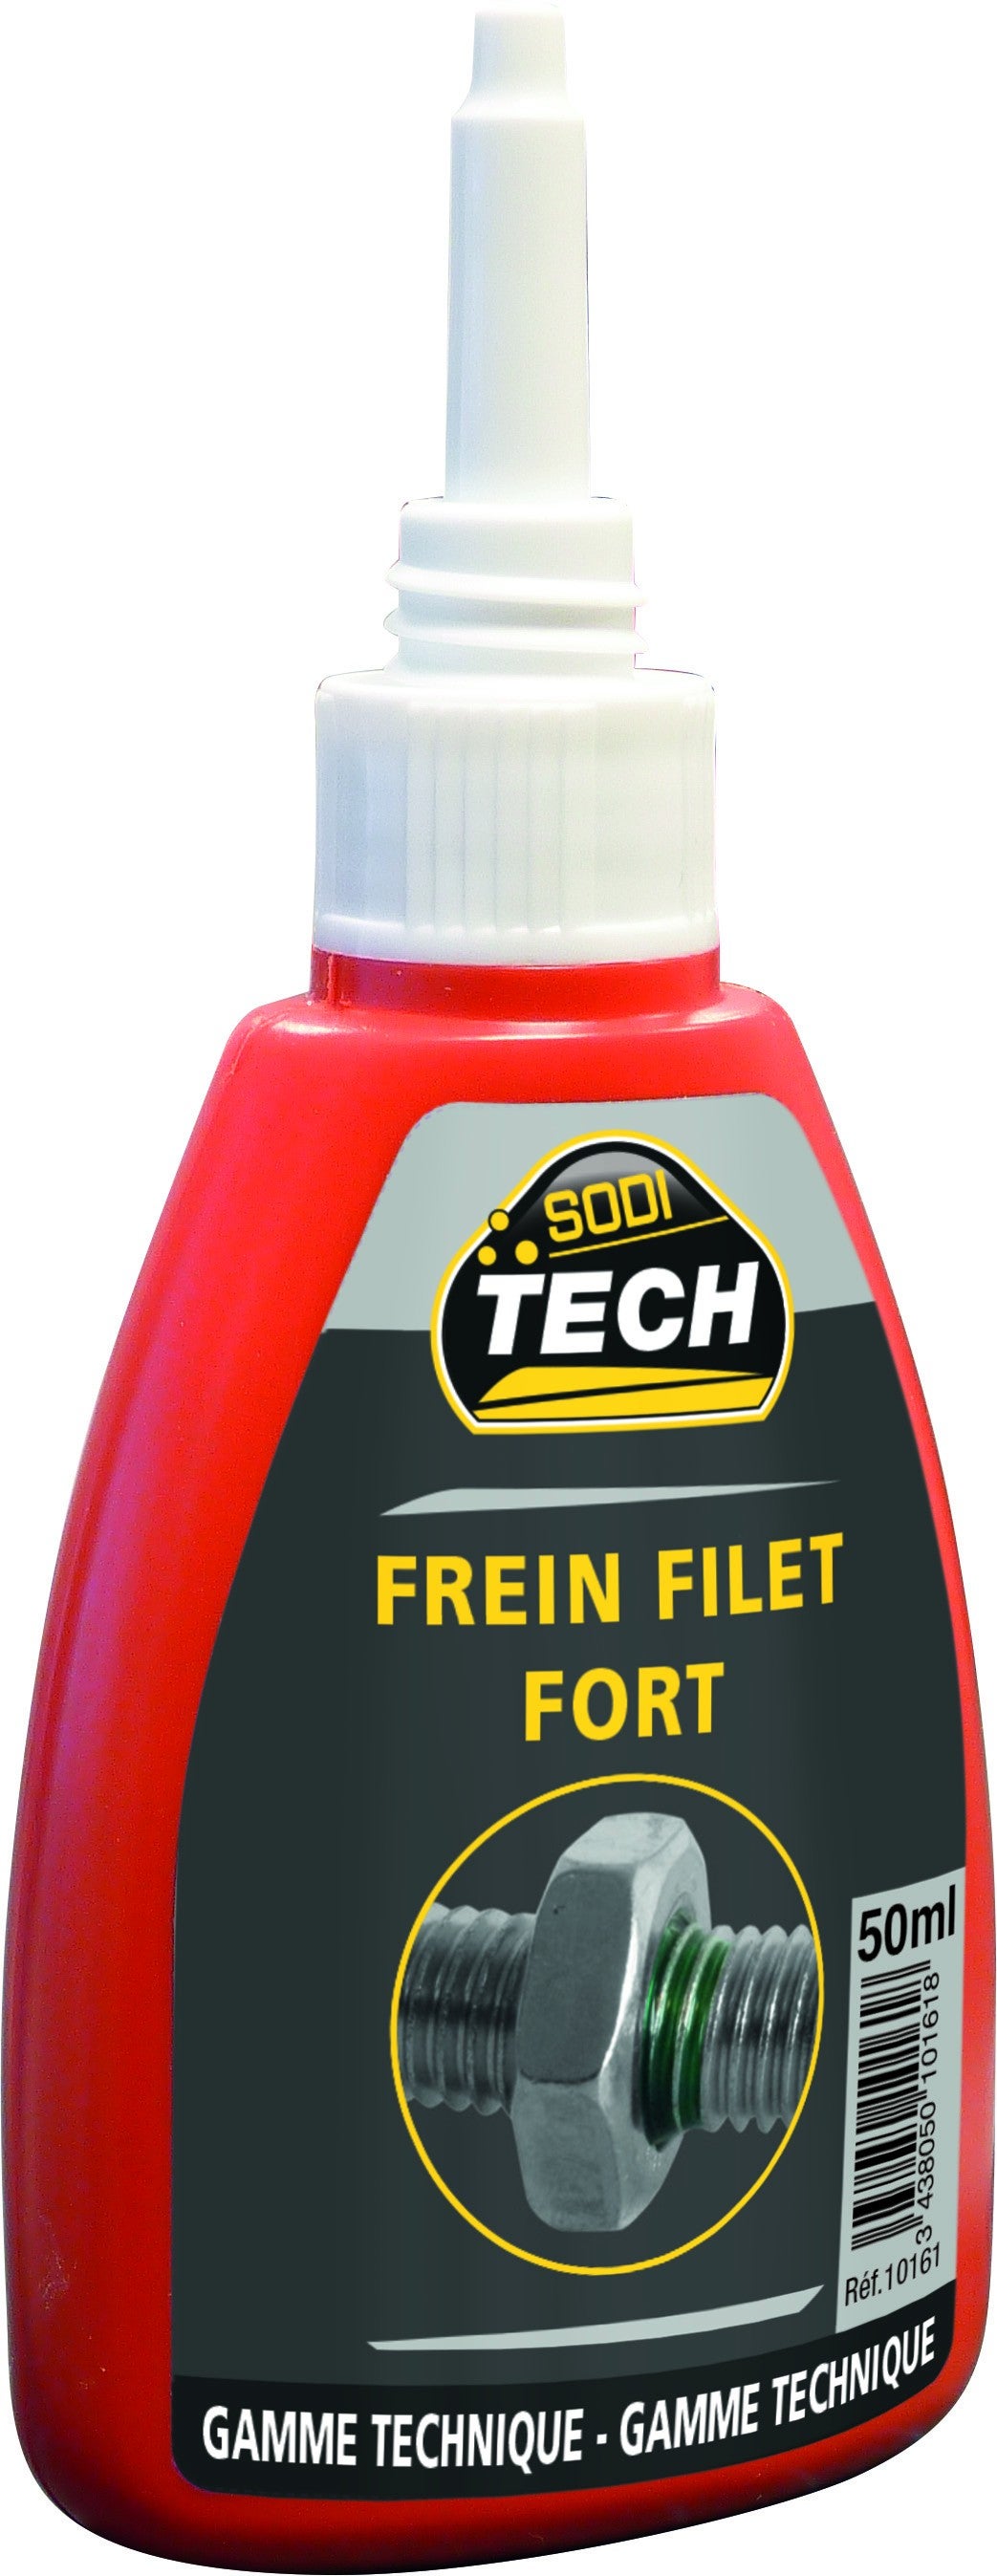 Frein filet Grip fort 50ml flacon SODITECH- S10161